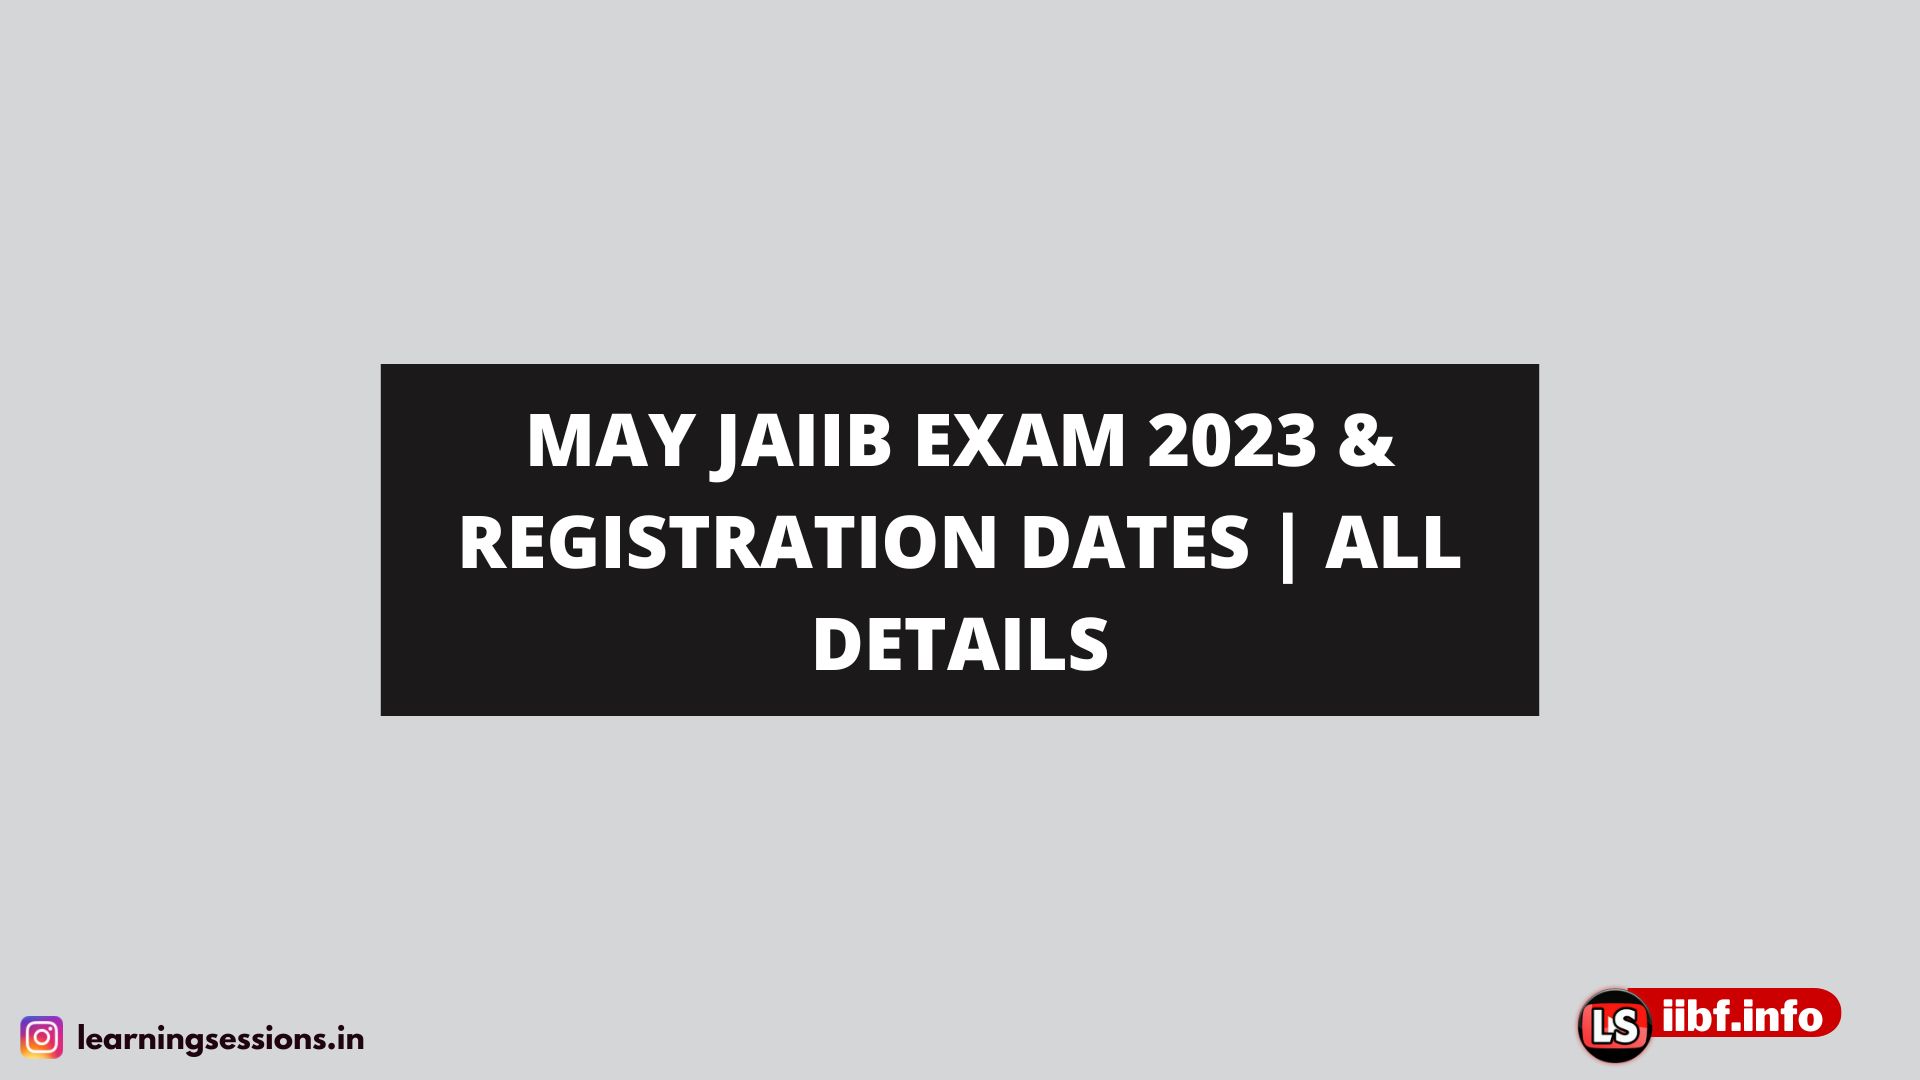 MAY JAIIB EXAM 2023 & REGISTRATION DATES | ALL DETAILS